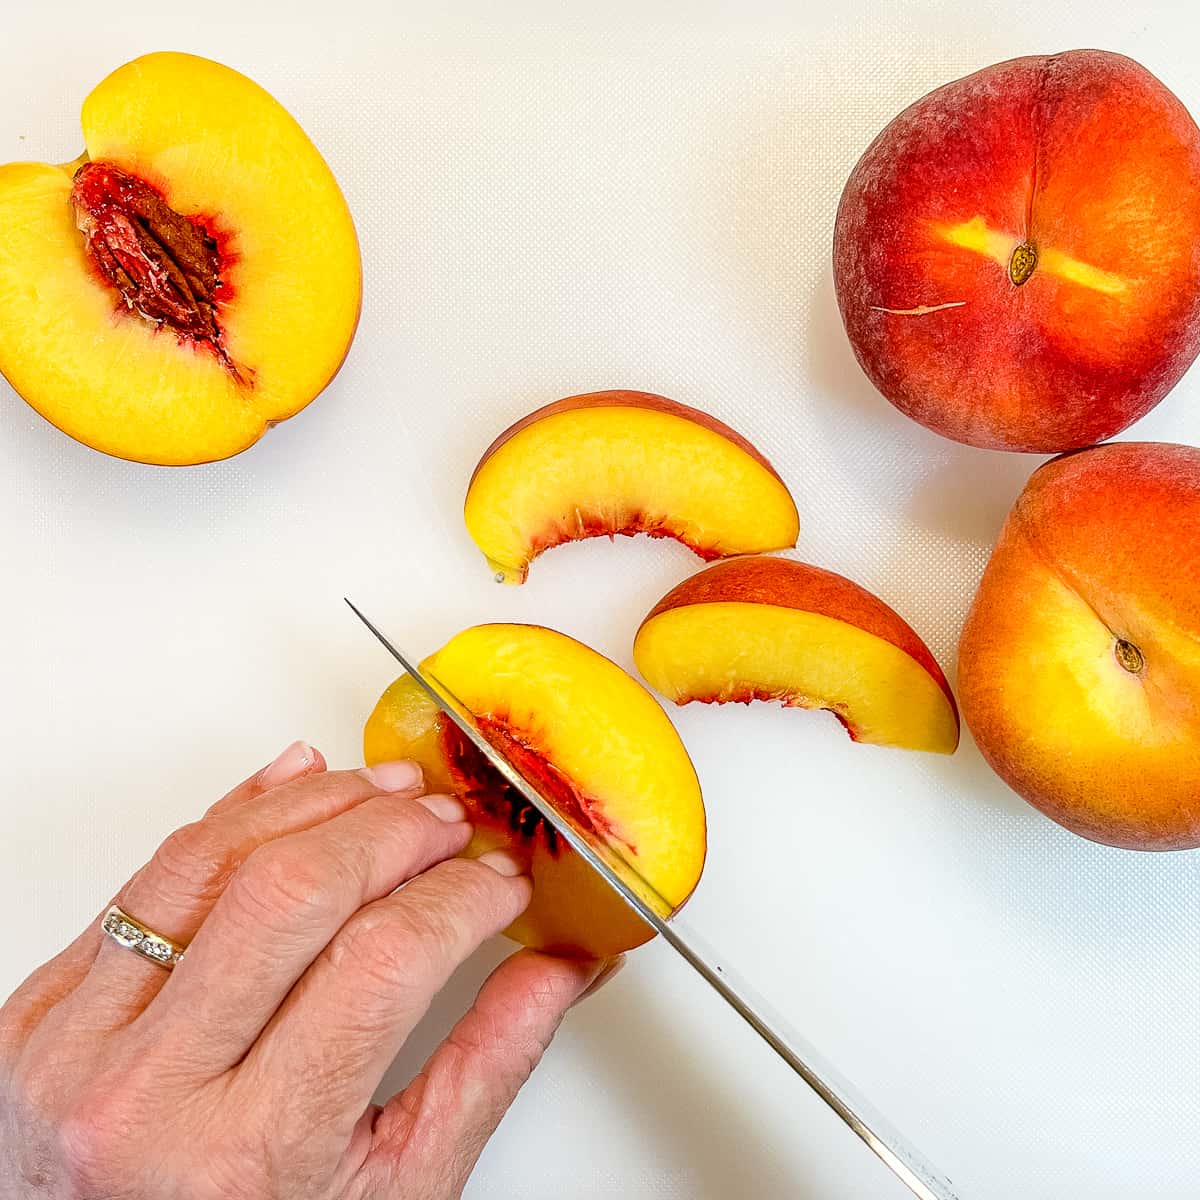 slicing a peach into eighths.